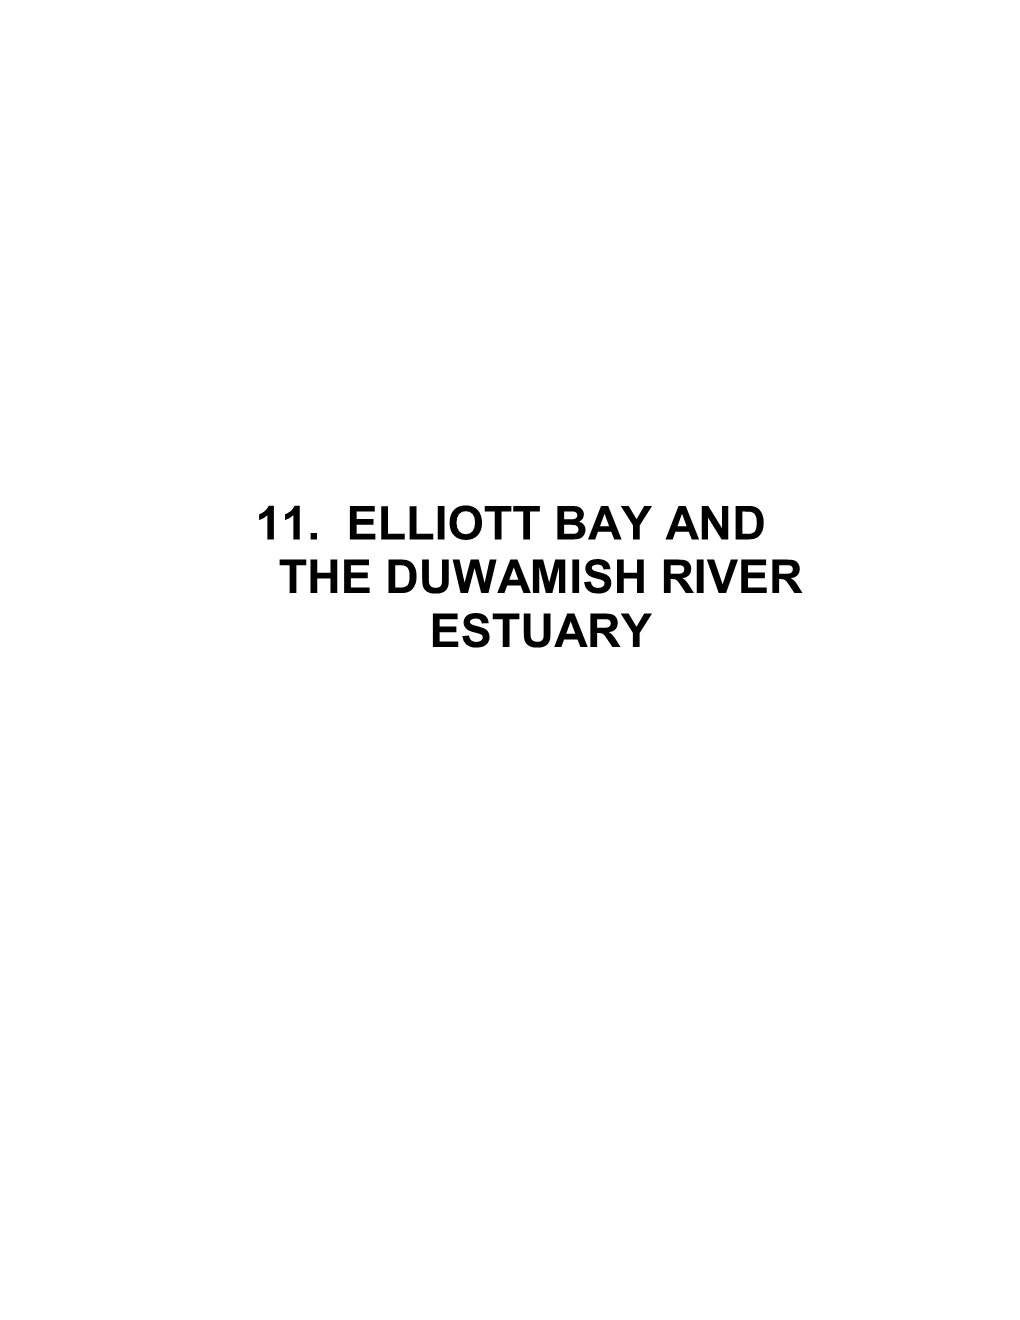 11. Elliott Bay and the Duwamish River Estuary 11